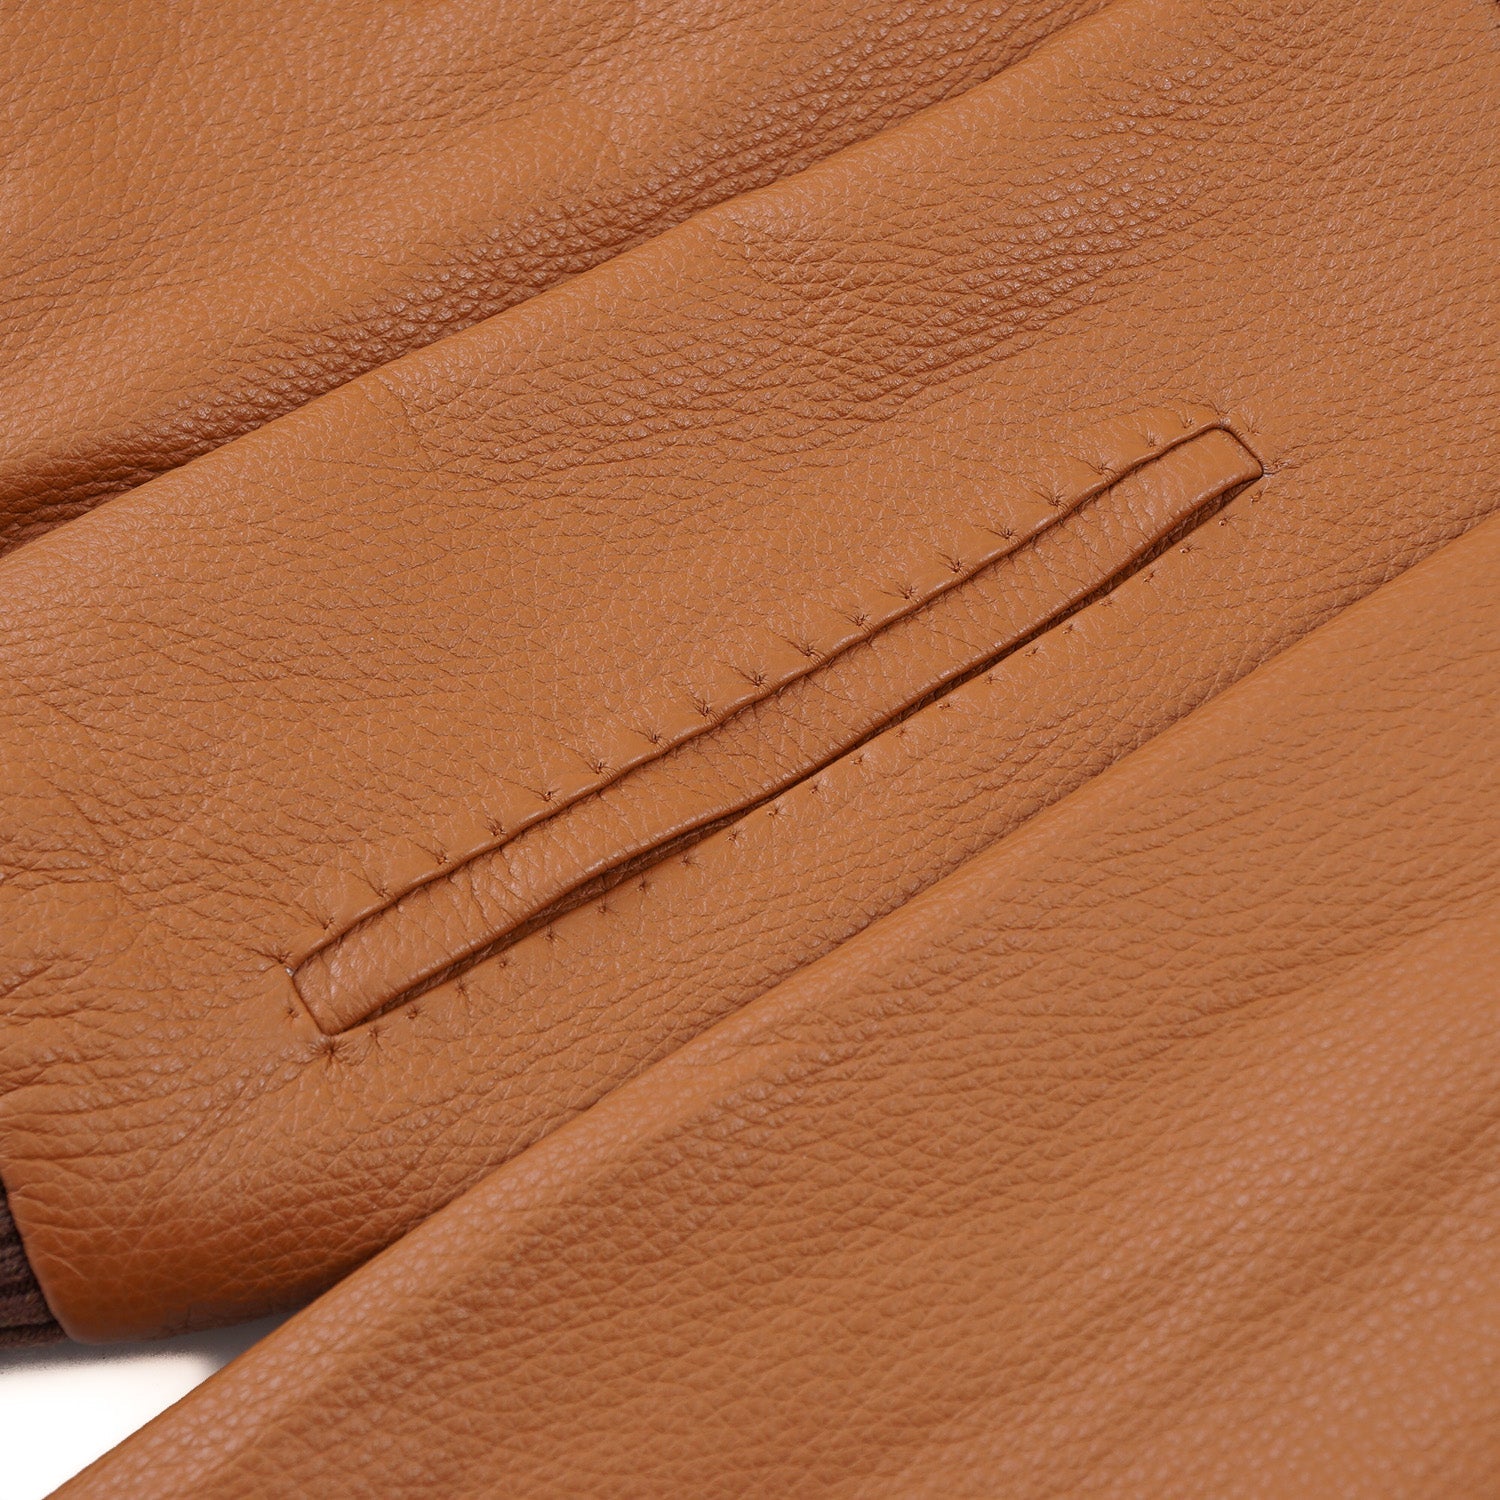 Rifugio Deerskin Jacket with Beaver Collar – Top Shelf Apparel